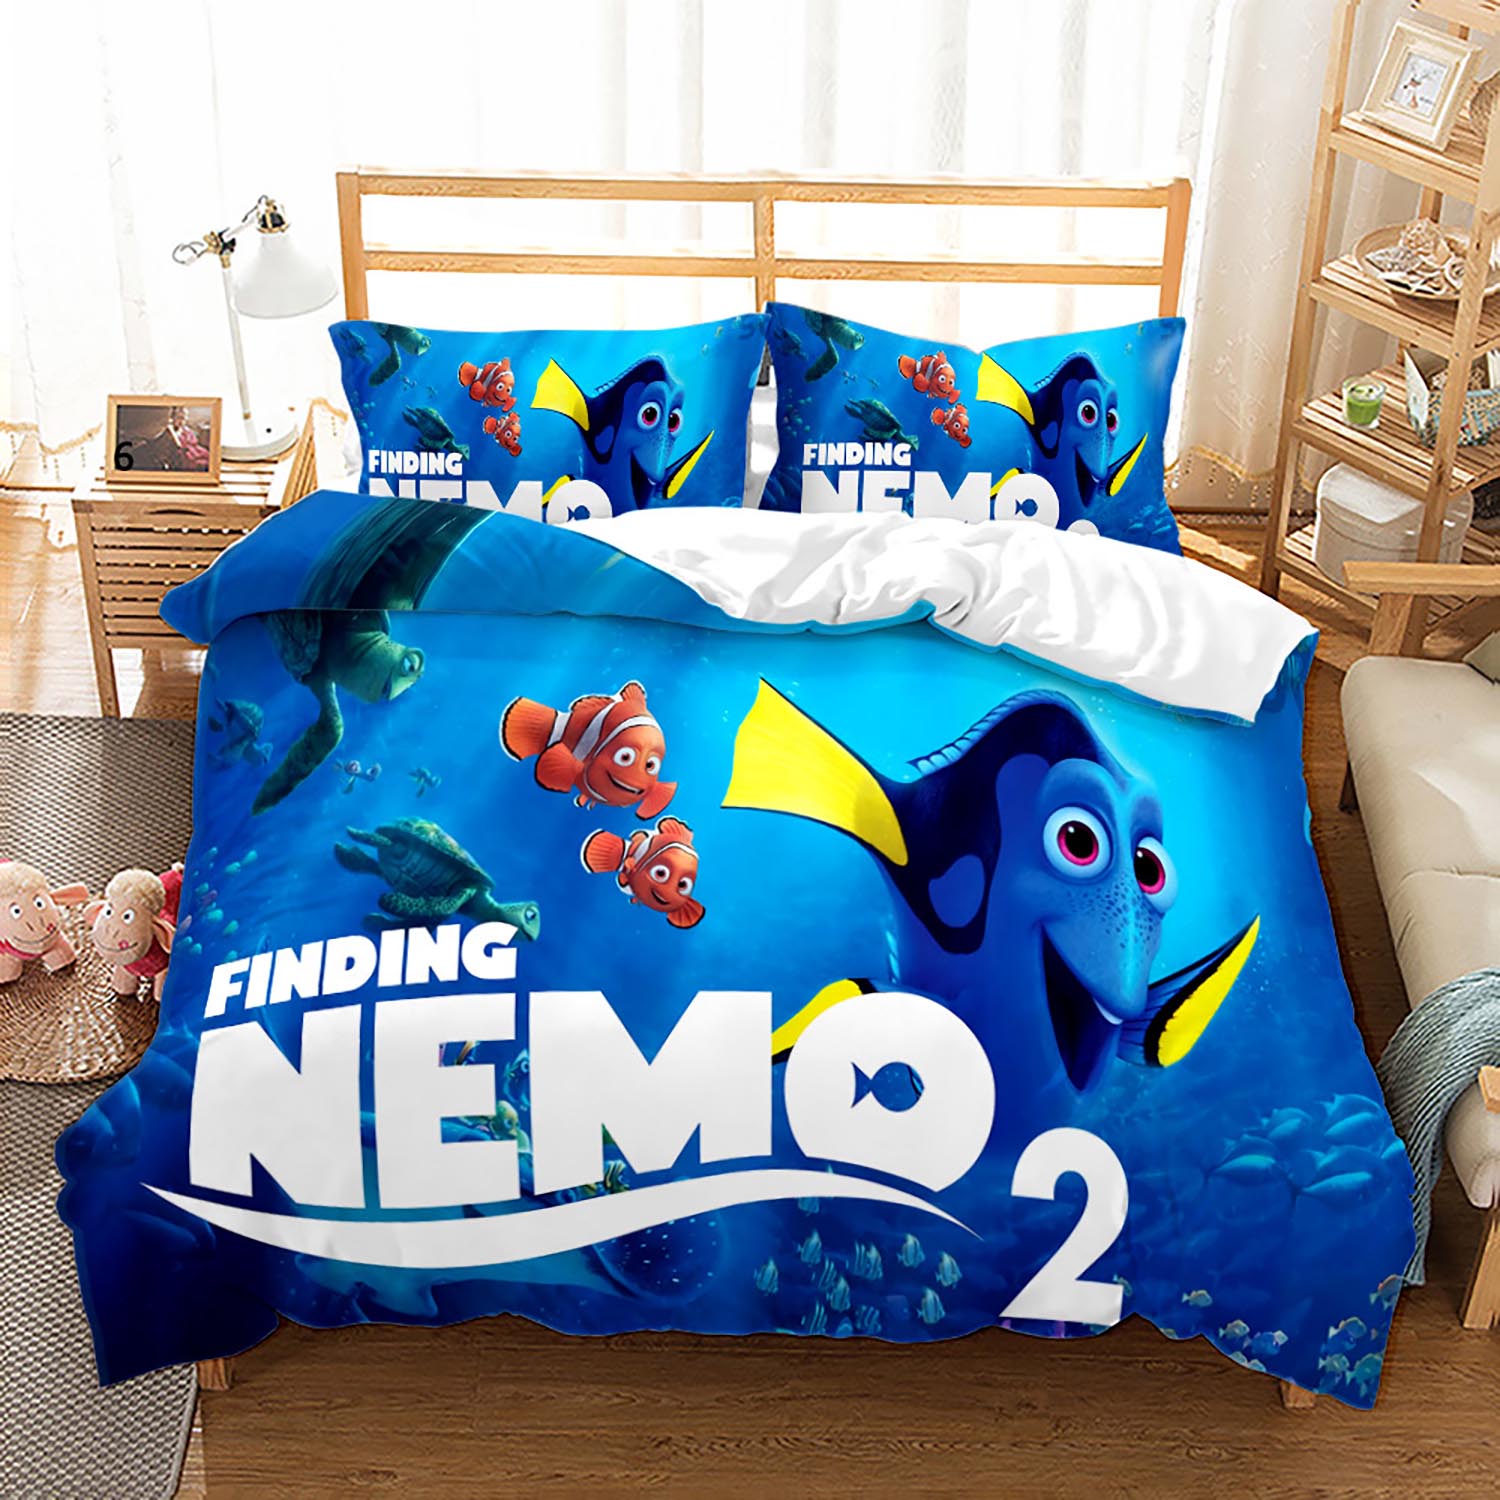 Nemo 2 Bettbezug